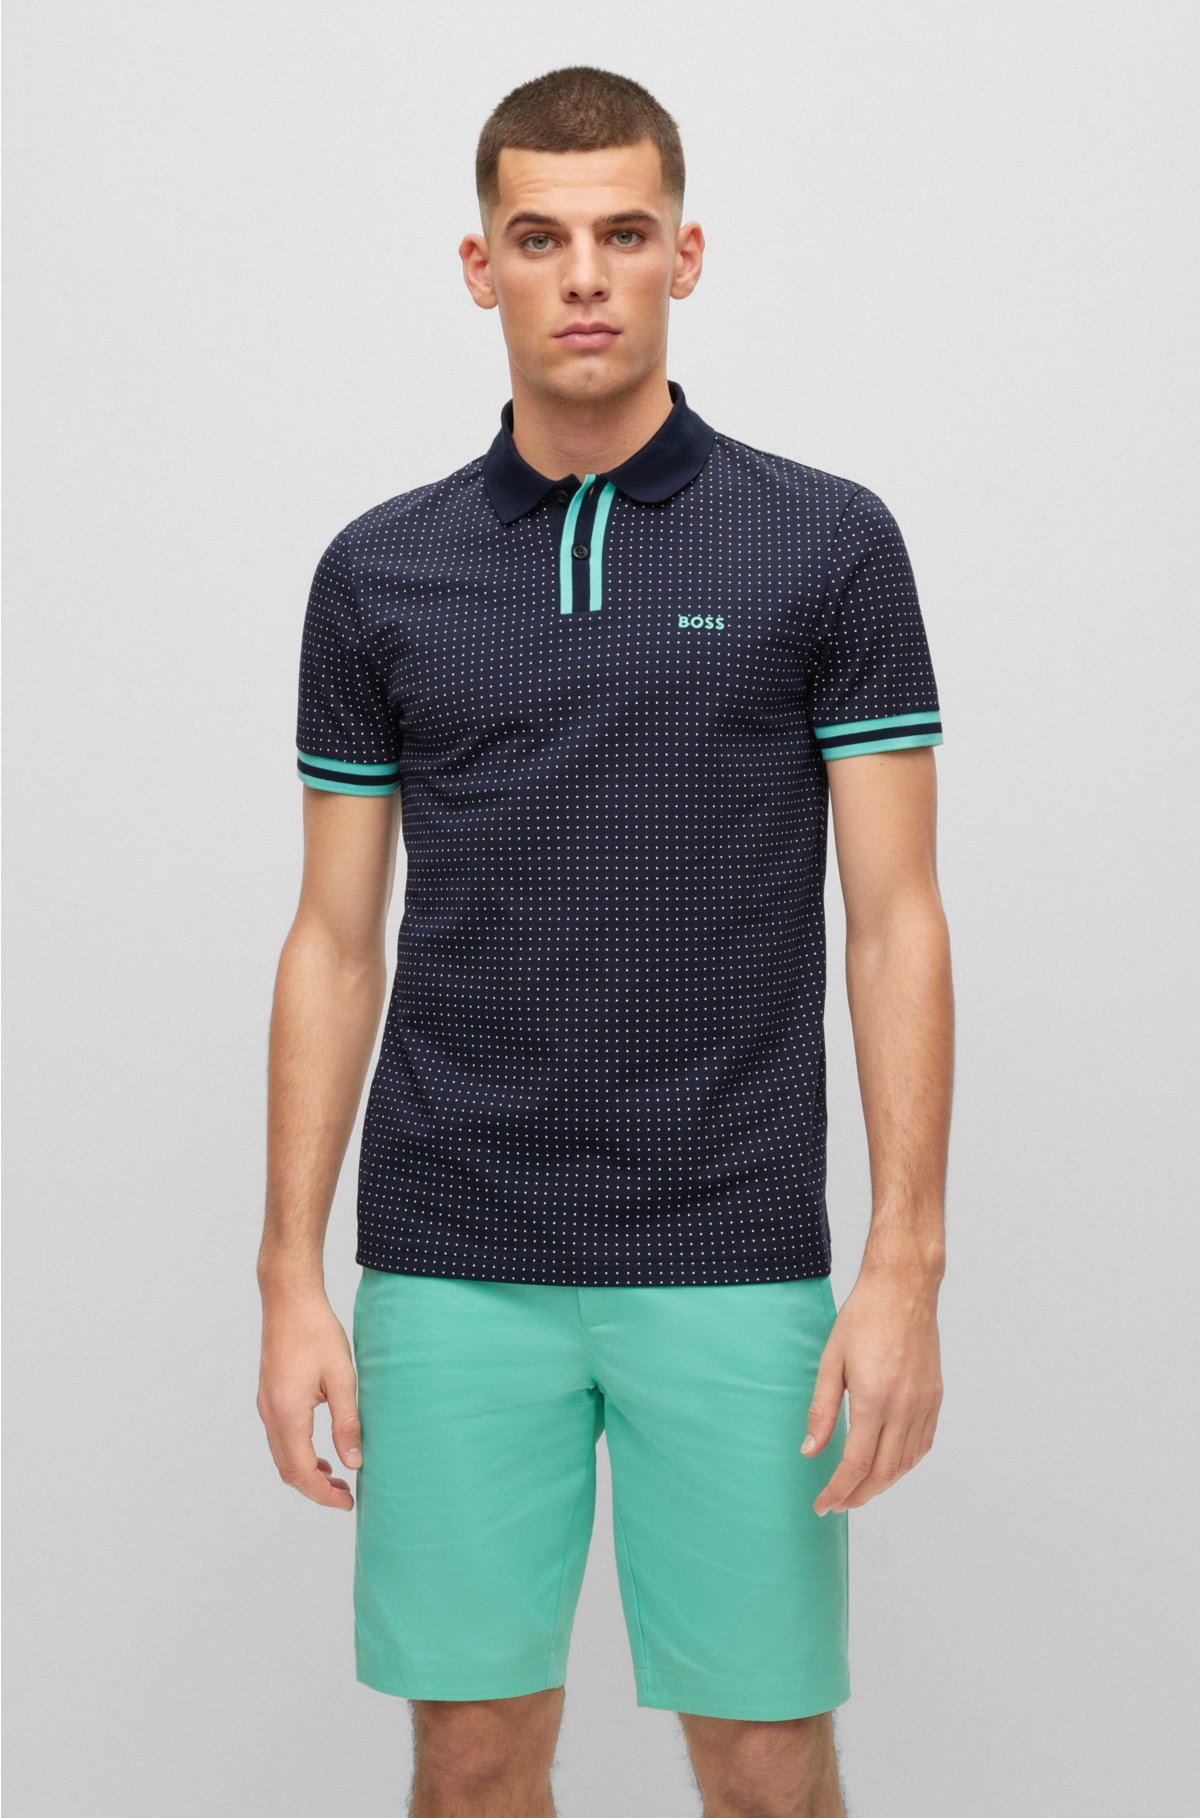 stretch-cotton piqué - Regular-fit shirt polo in BOSS